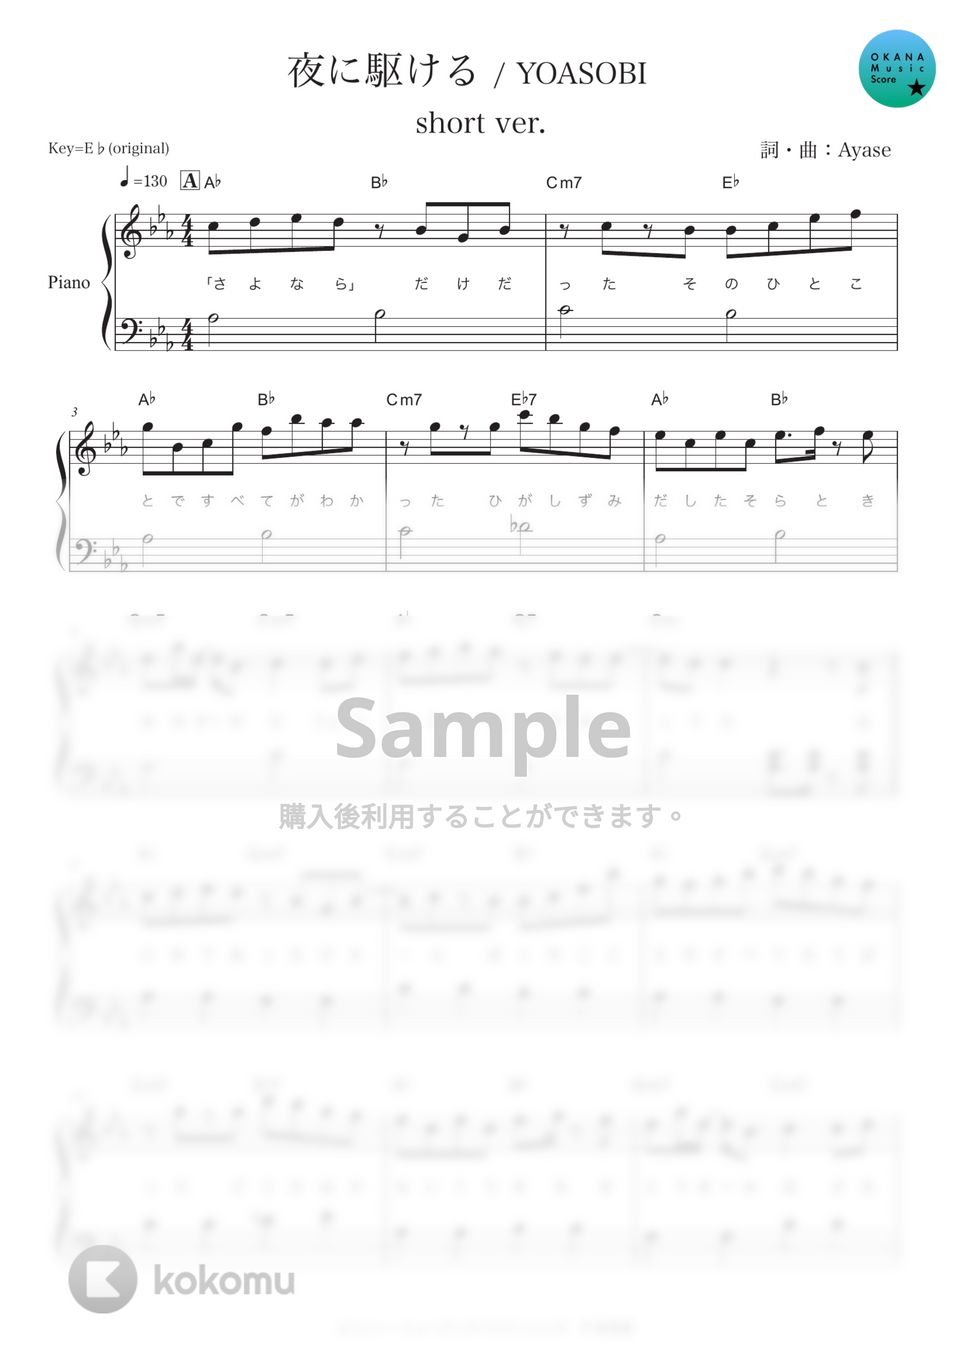 YOASOBI - 夜に駆ける(Short ver.) (ピアノ初級/Short/歌詞コード付) by OKANA